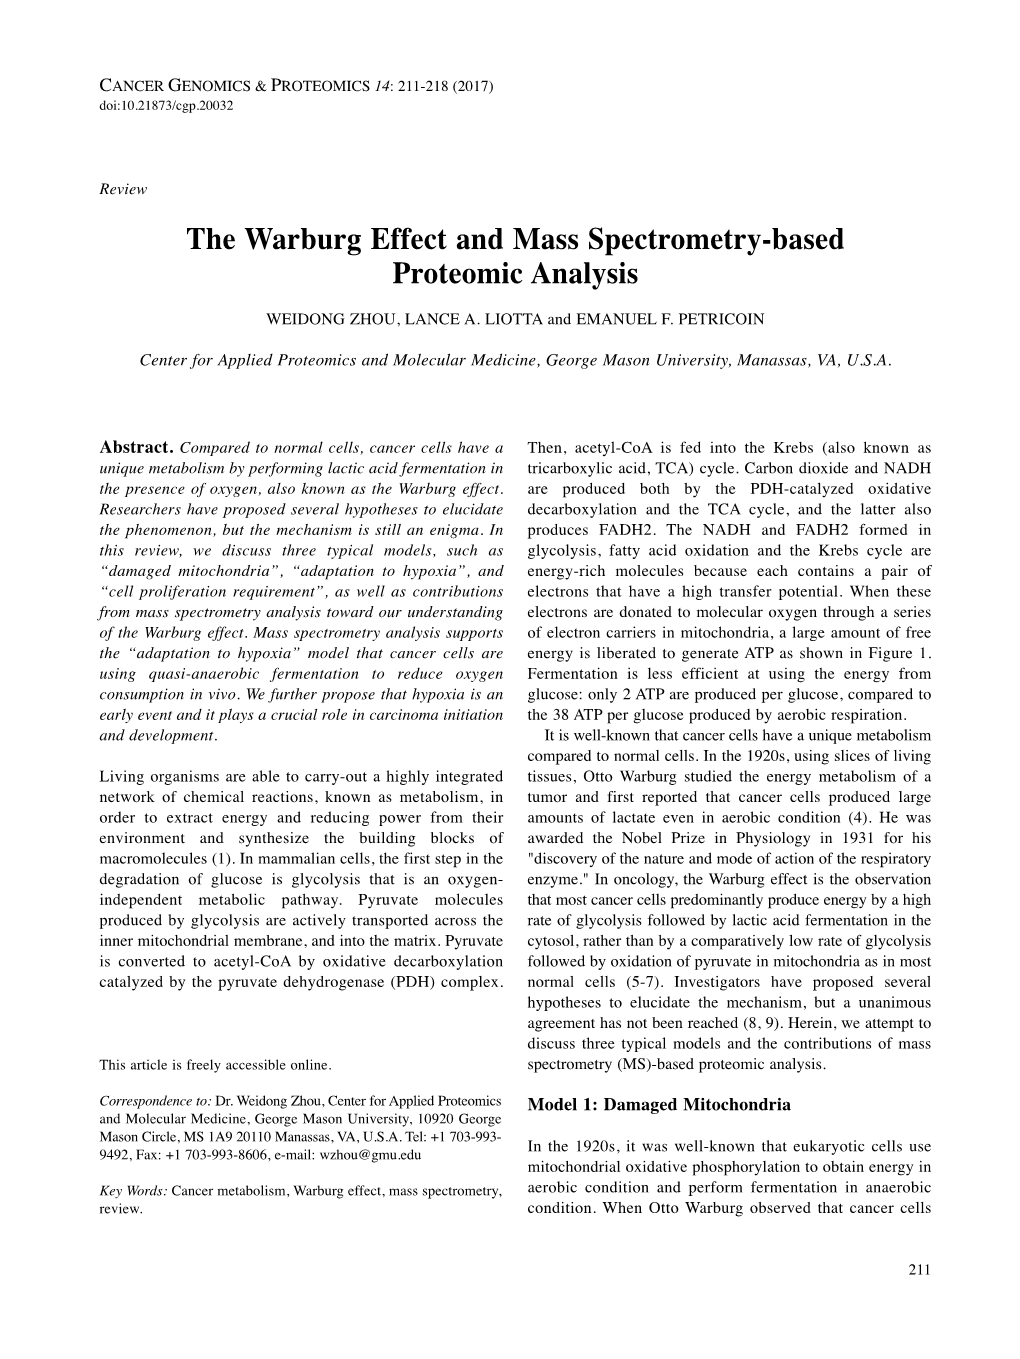 The Warburg Effect and Mass Spectrometry-Based Proteomic Analysis WEIDONG ZHOU, LANCE A